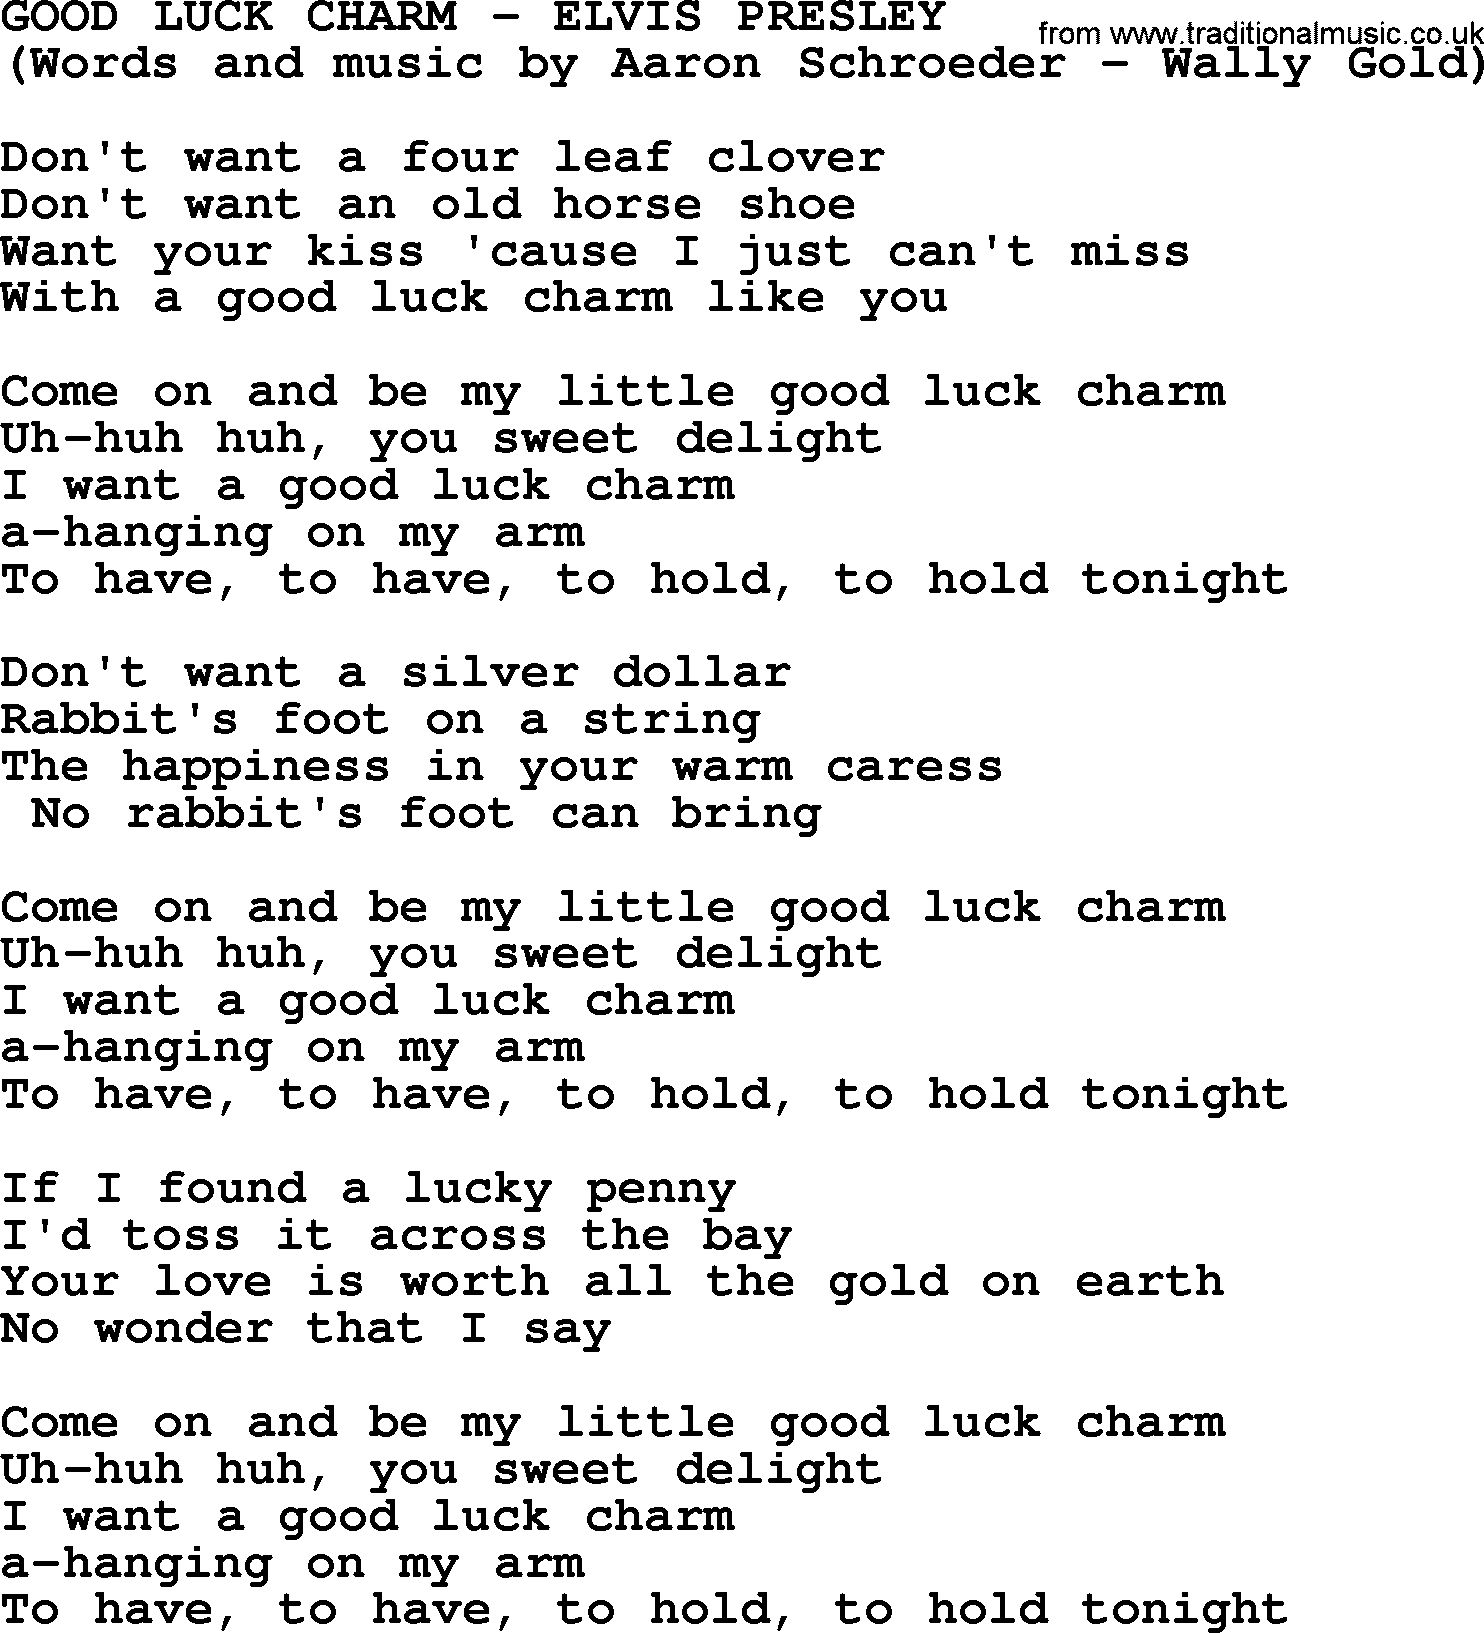 Elvis Presley song: Good Luck Charm lyrics